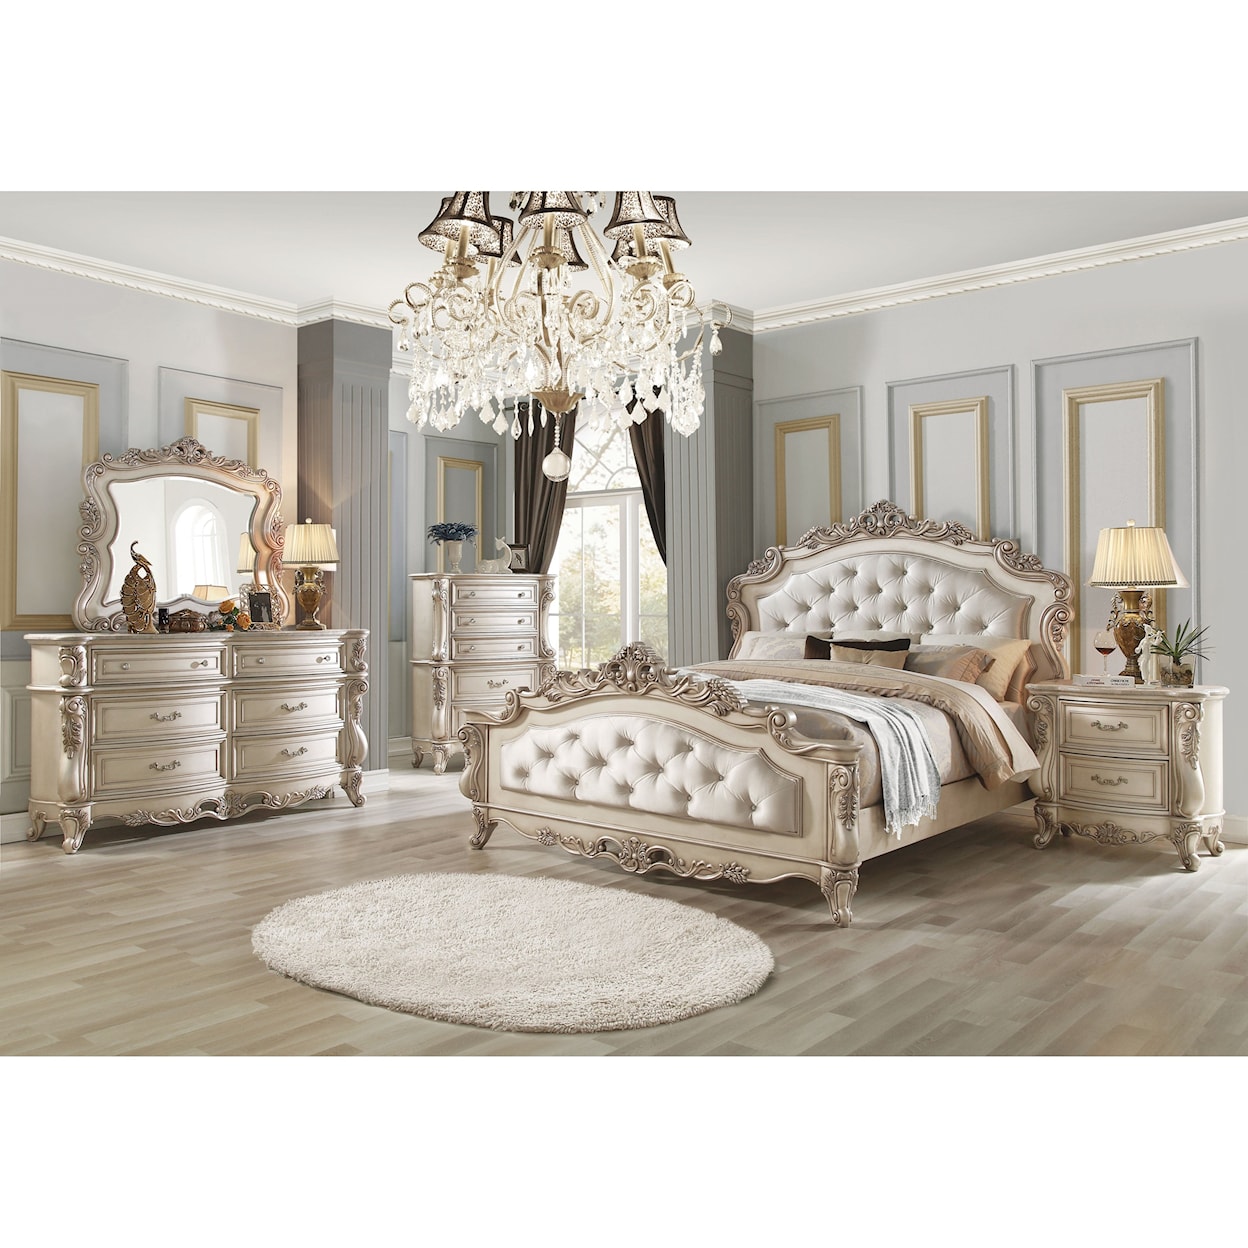 Acme Furniture Gorsedd King Bedroom Group